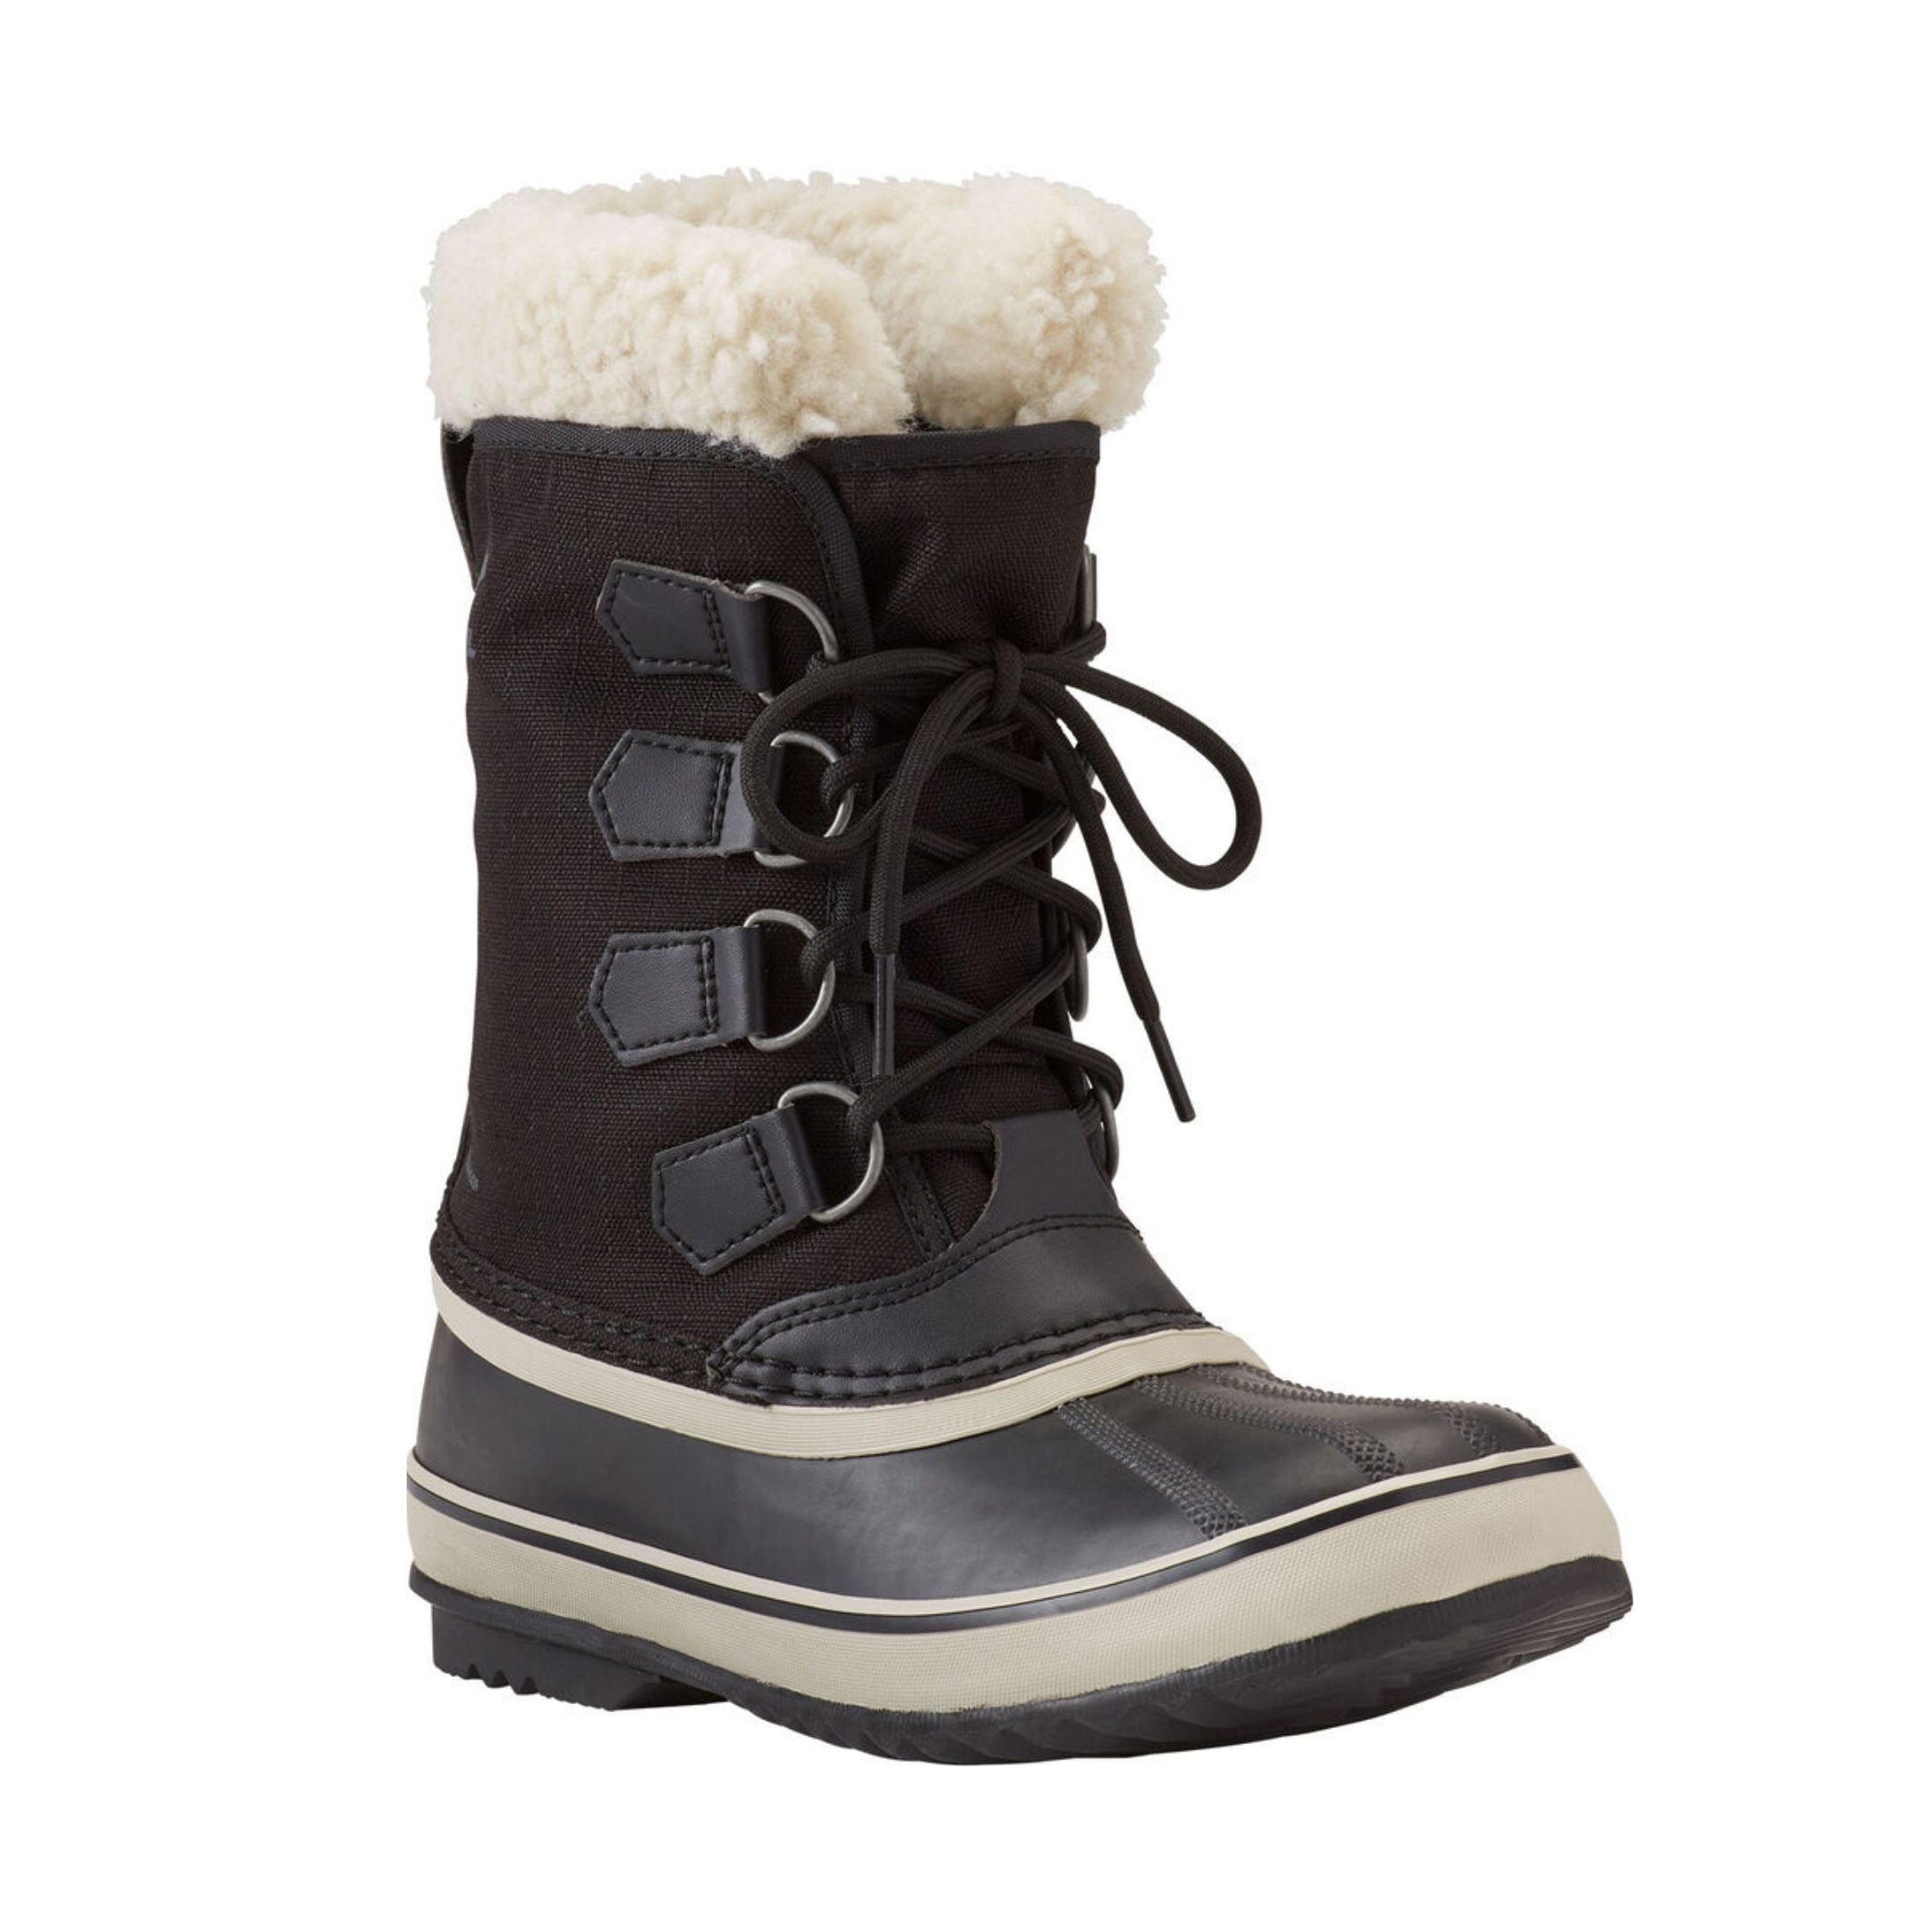 Comfortable Women's Winter Boots